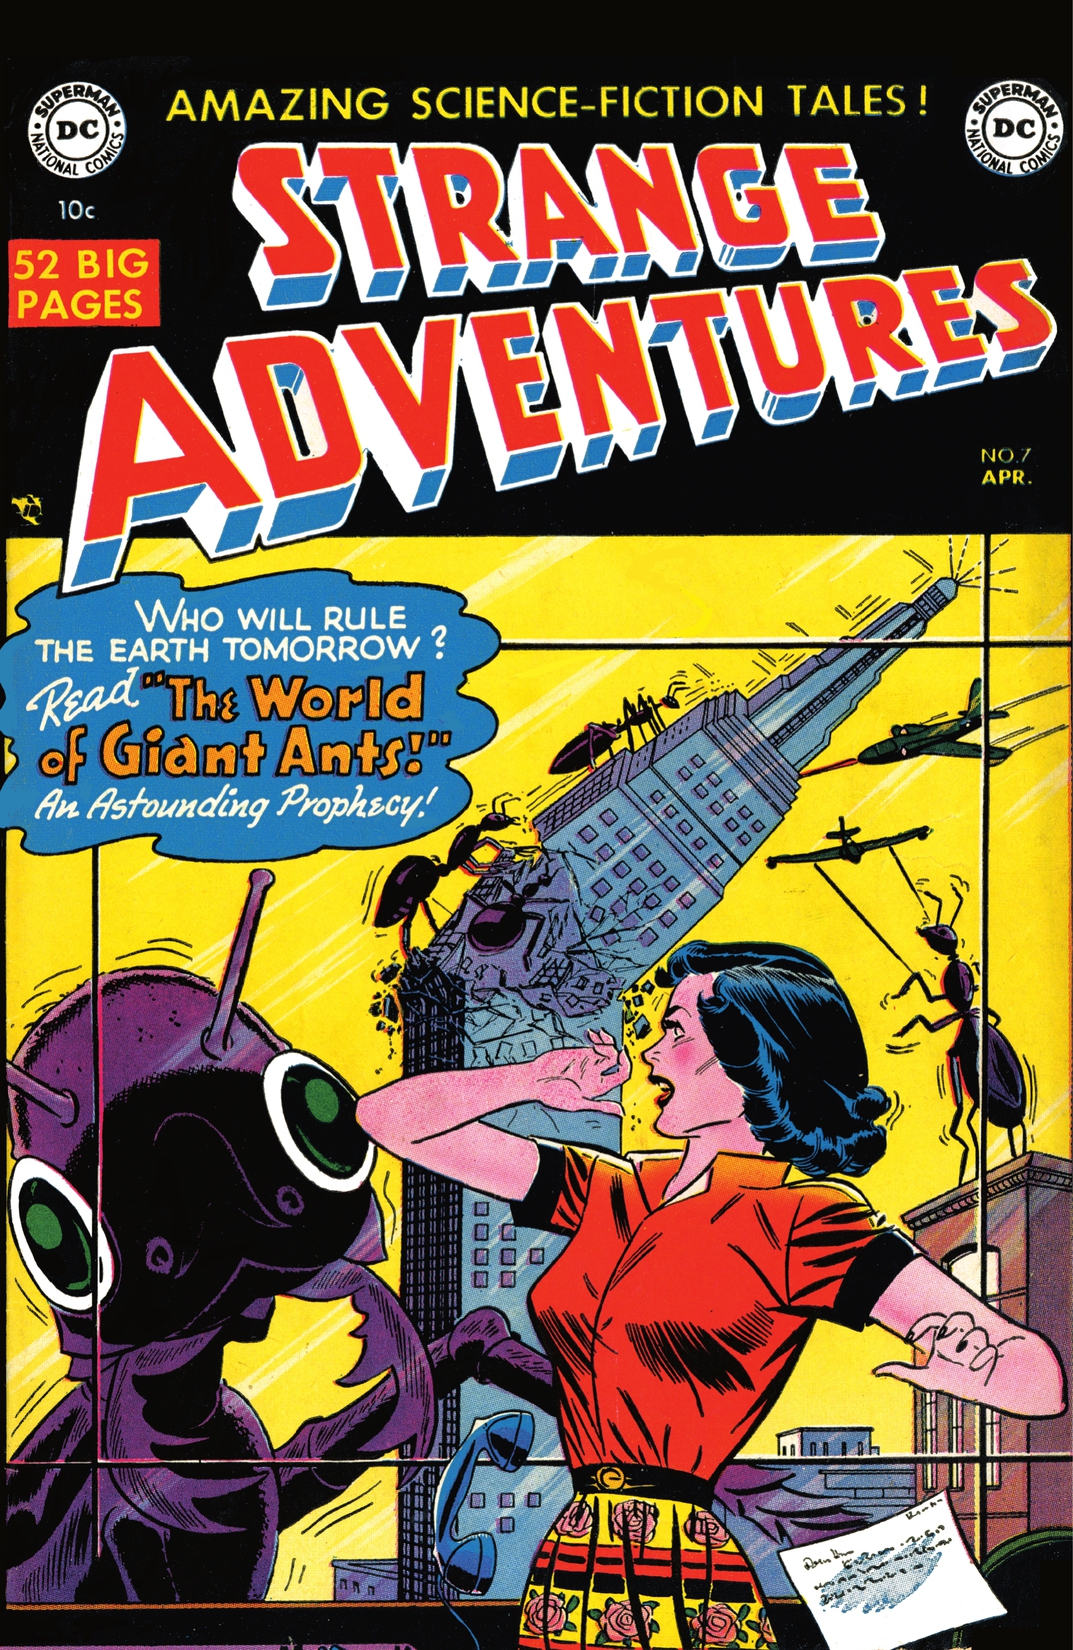 Strange Adventures (1950-1973) #7 preview images